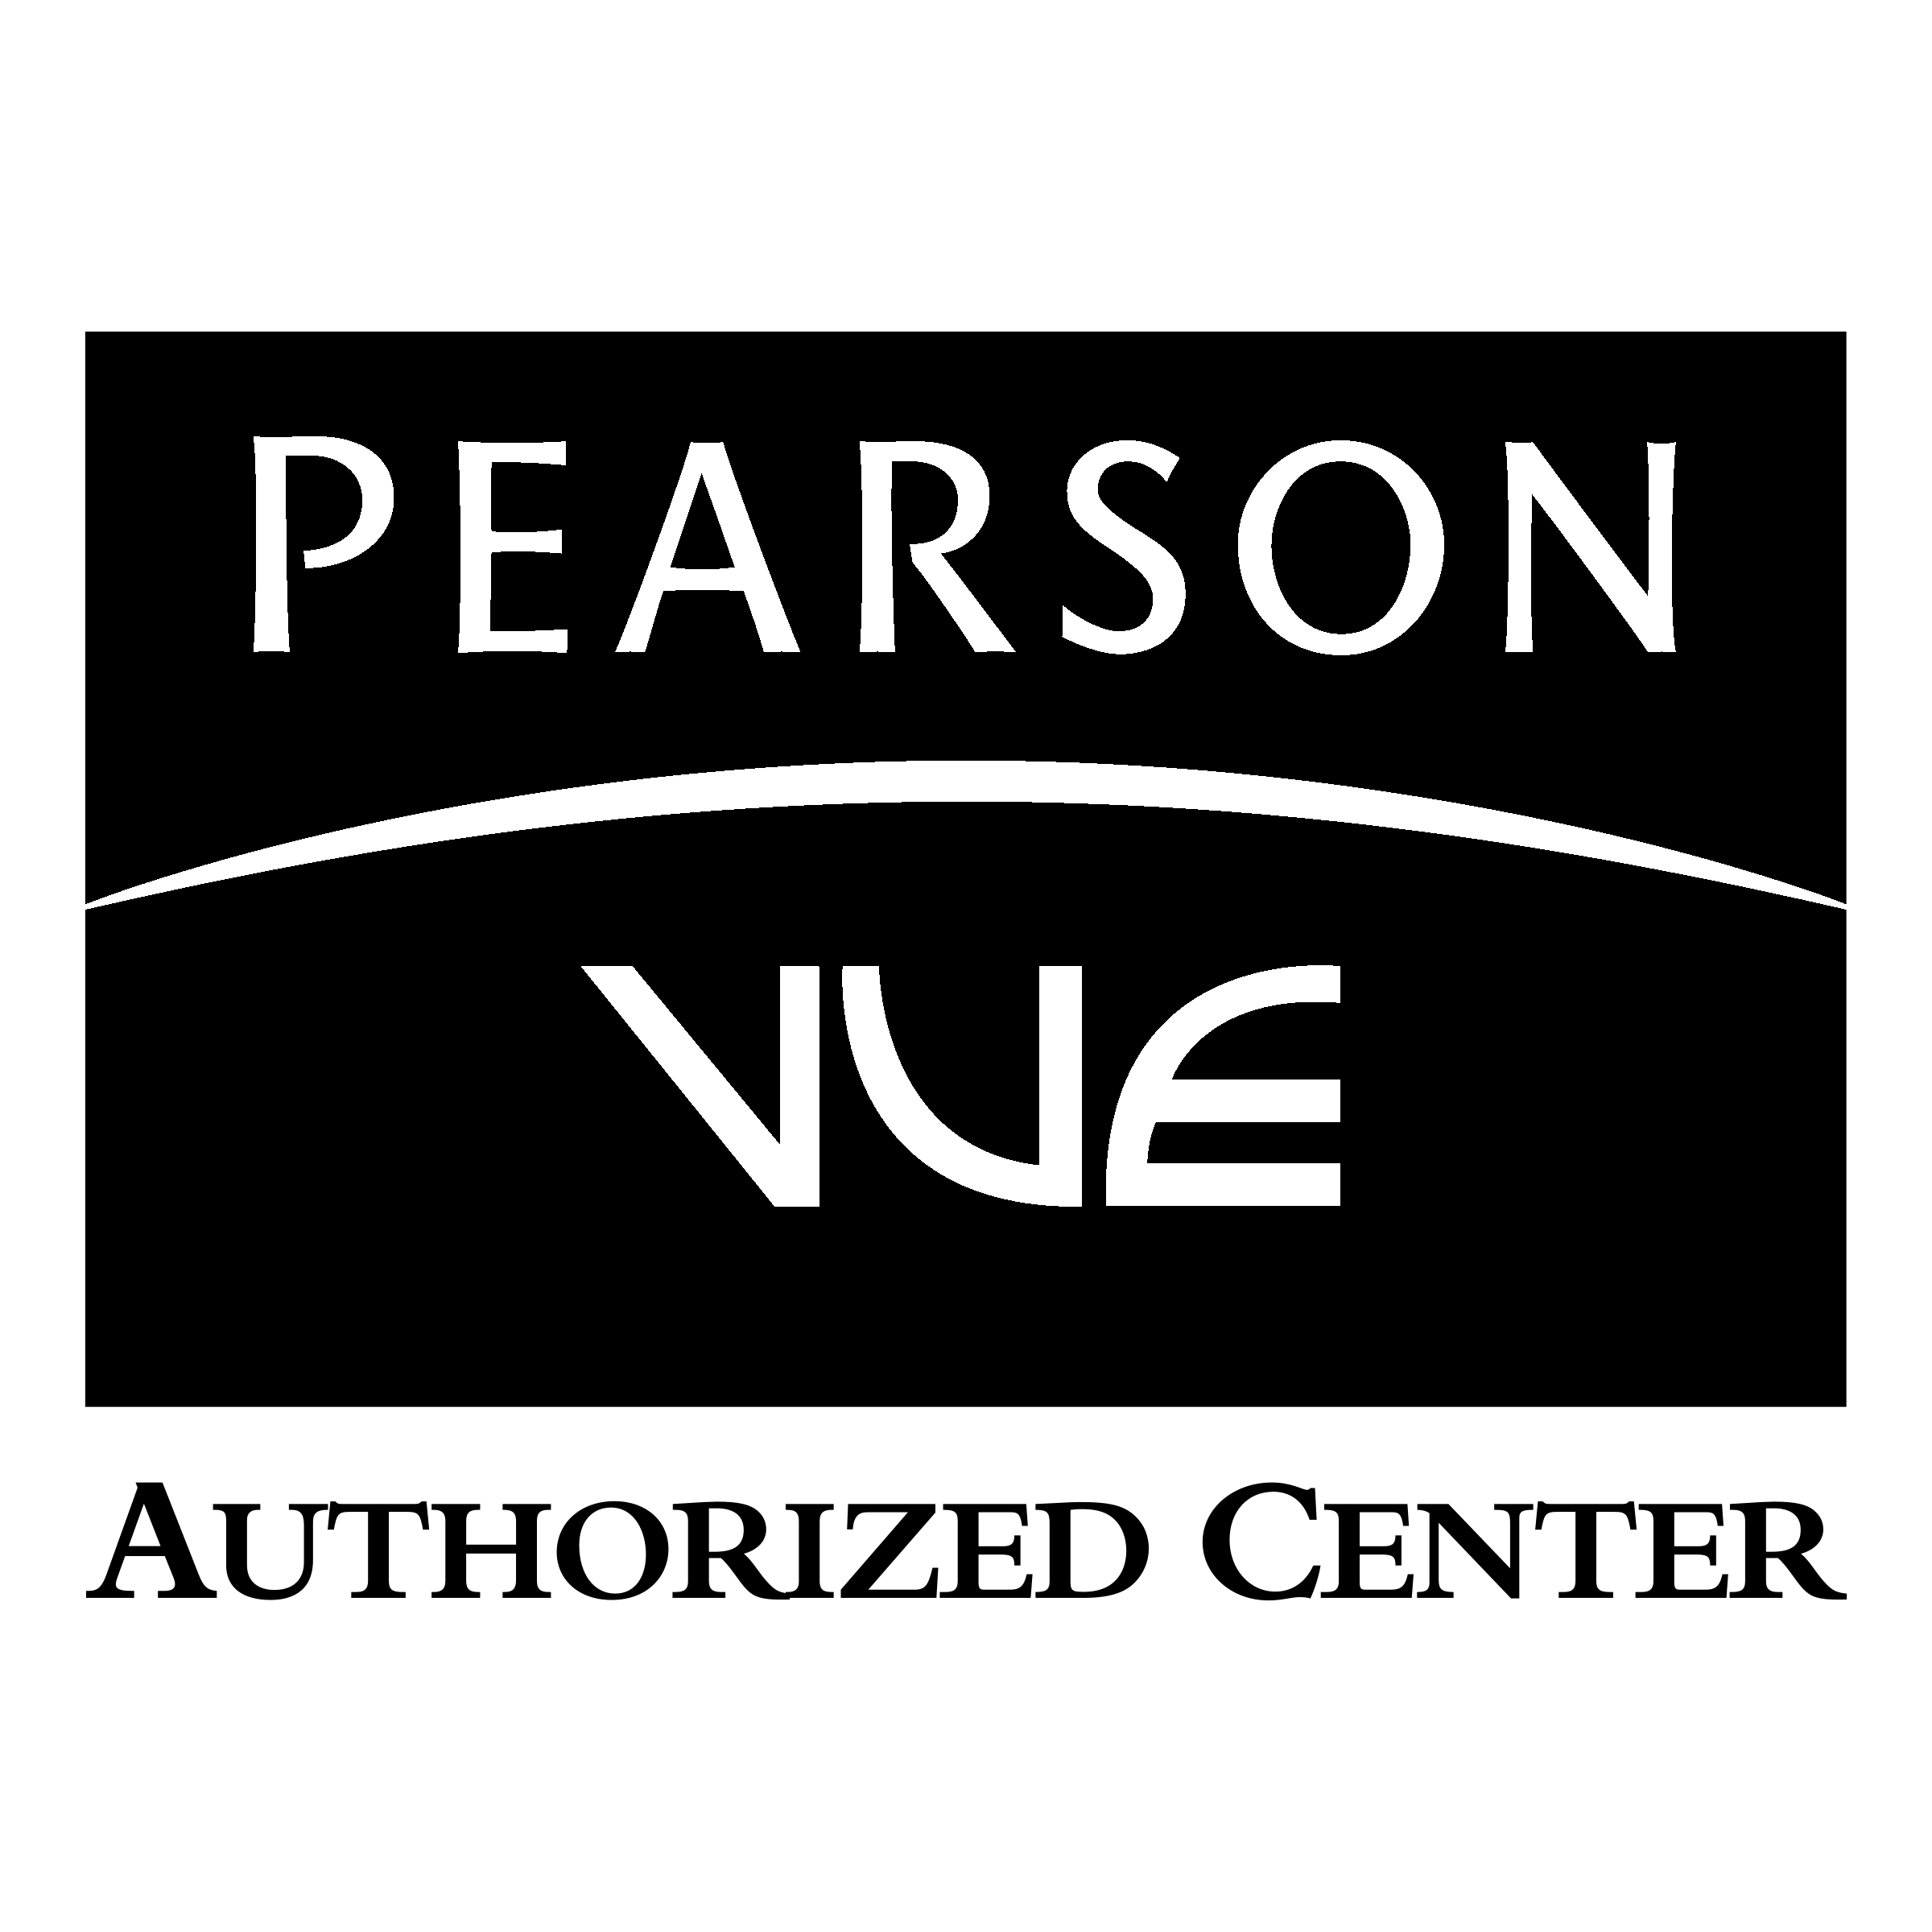 Vue Logo - Pearson VUE Logo PNG Transparent & SVG Vector